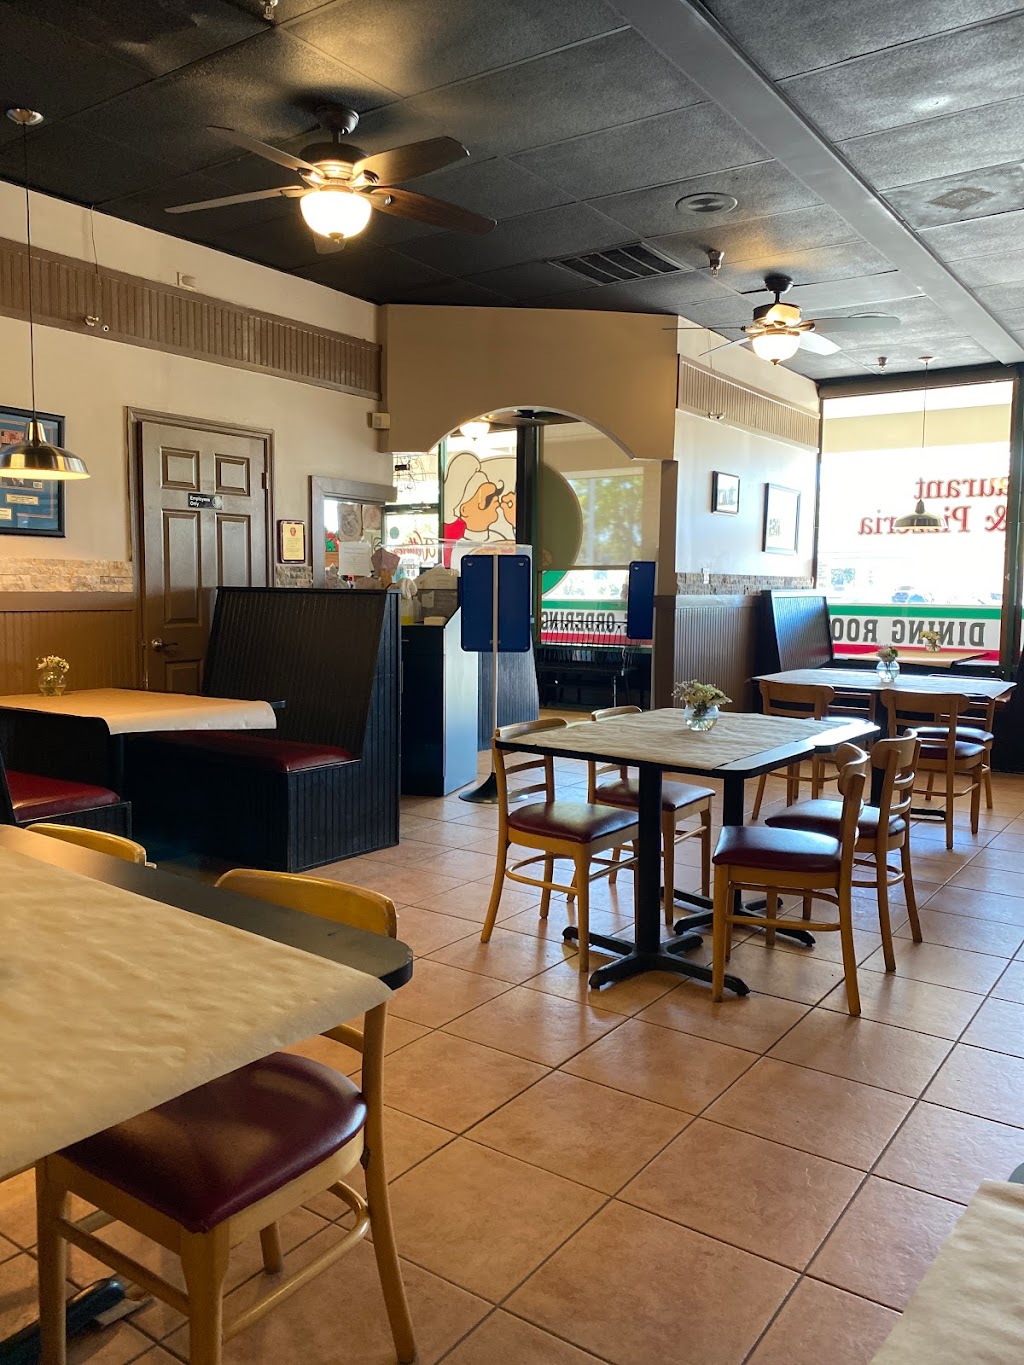 Vettures Pizzeria and Restaurant | 36137 E Lake Rd S, Palm Harbor, FL 34685 | Phone: (727) 787-4858